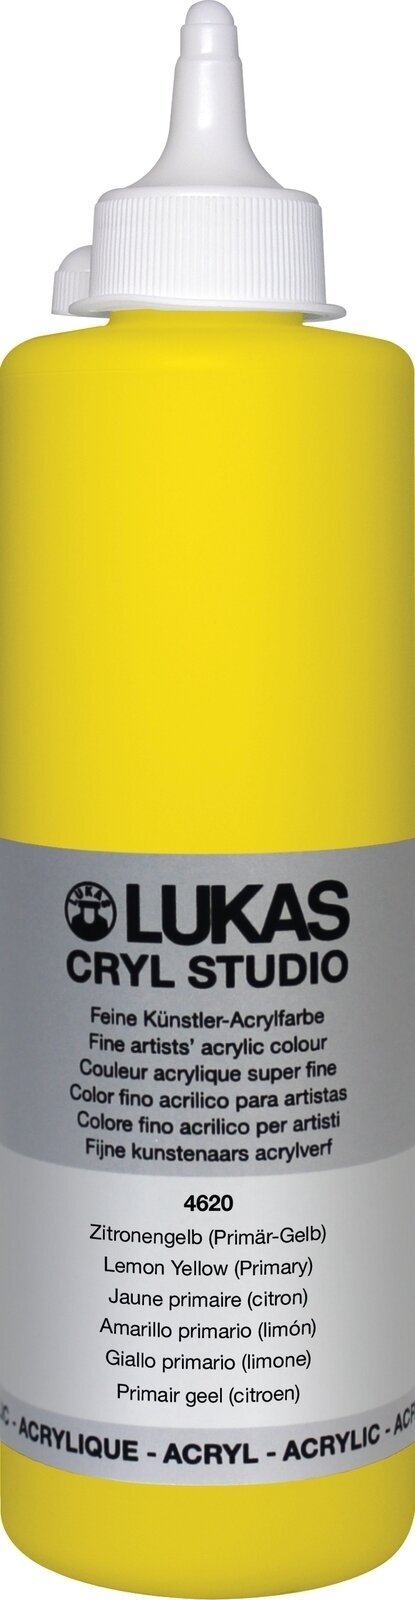 Acrylic Paint Lukas Cryl Studio Acrylic Paint Plastic Bottle Acrylic Paint Lemon Yellow (Primary) 500 ml 1 pc